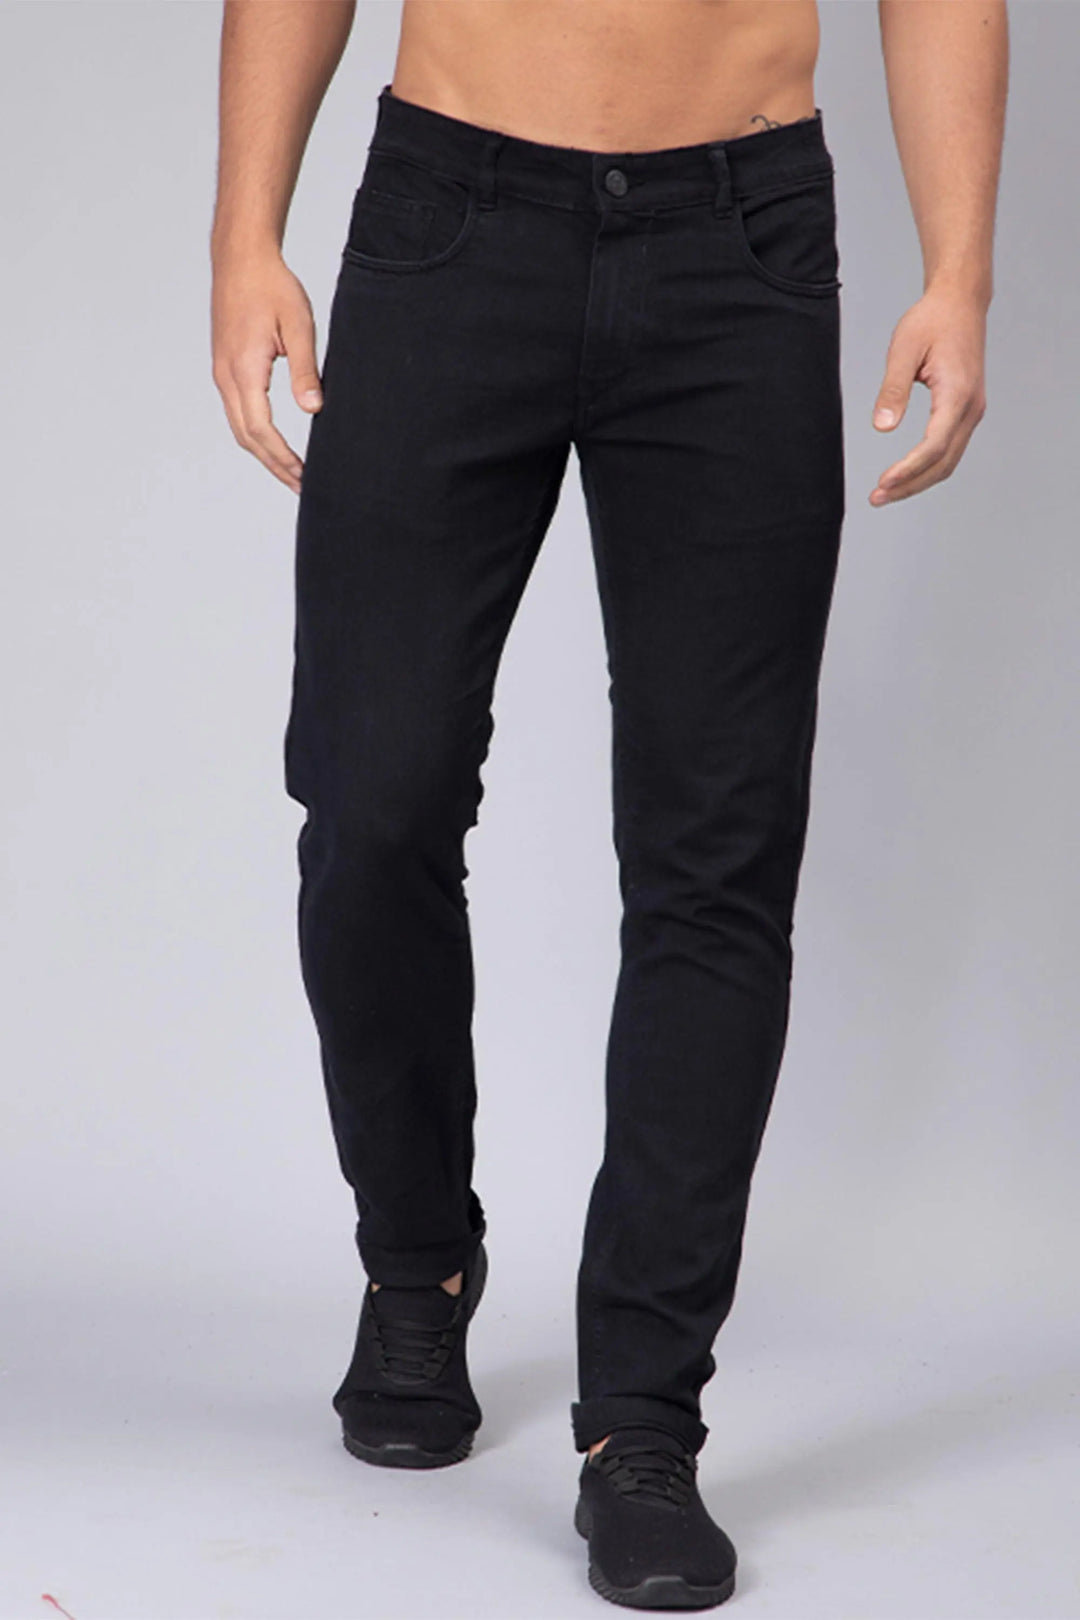 Slim Tapered Fit Z Black Premium Denim Jeans For Men - Peplos Jeans 